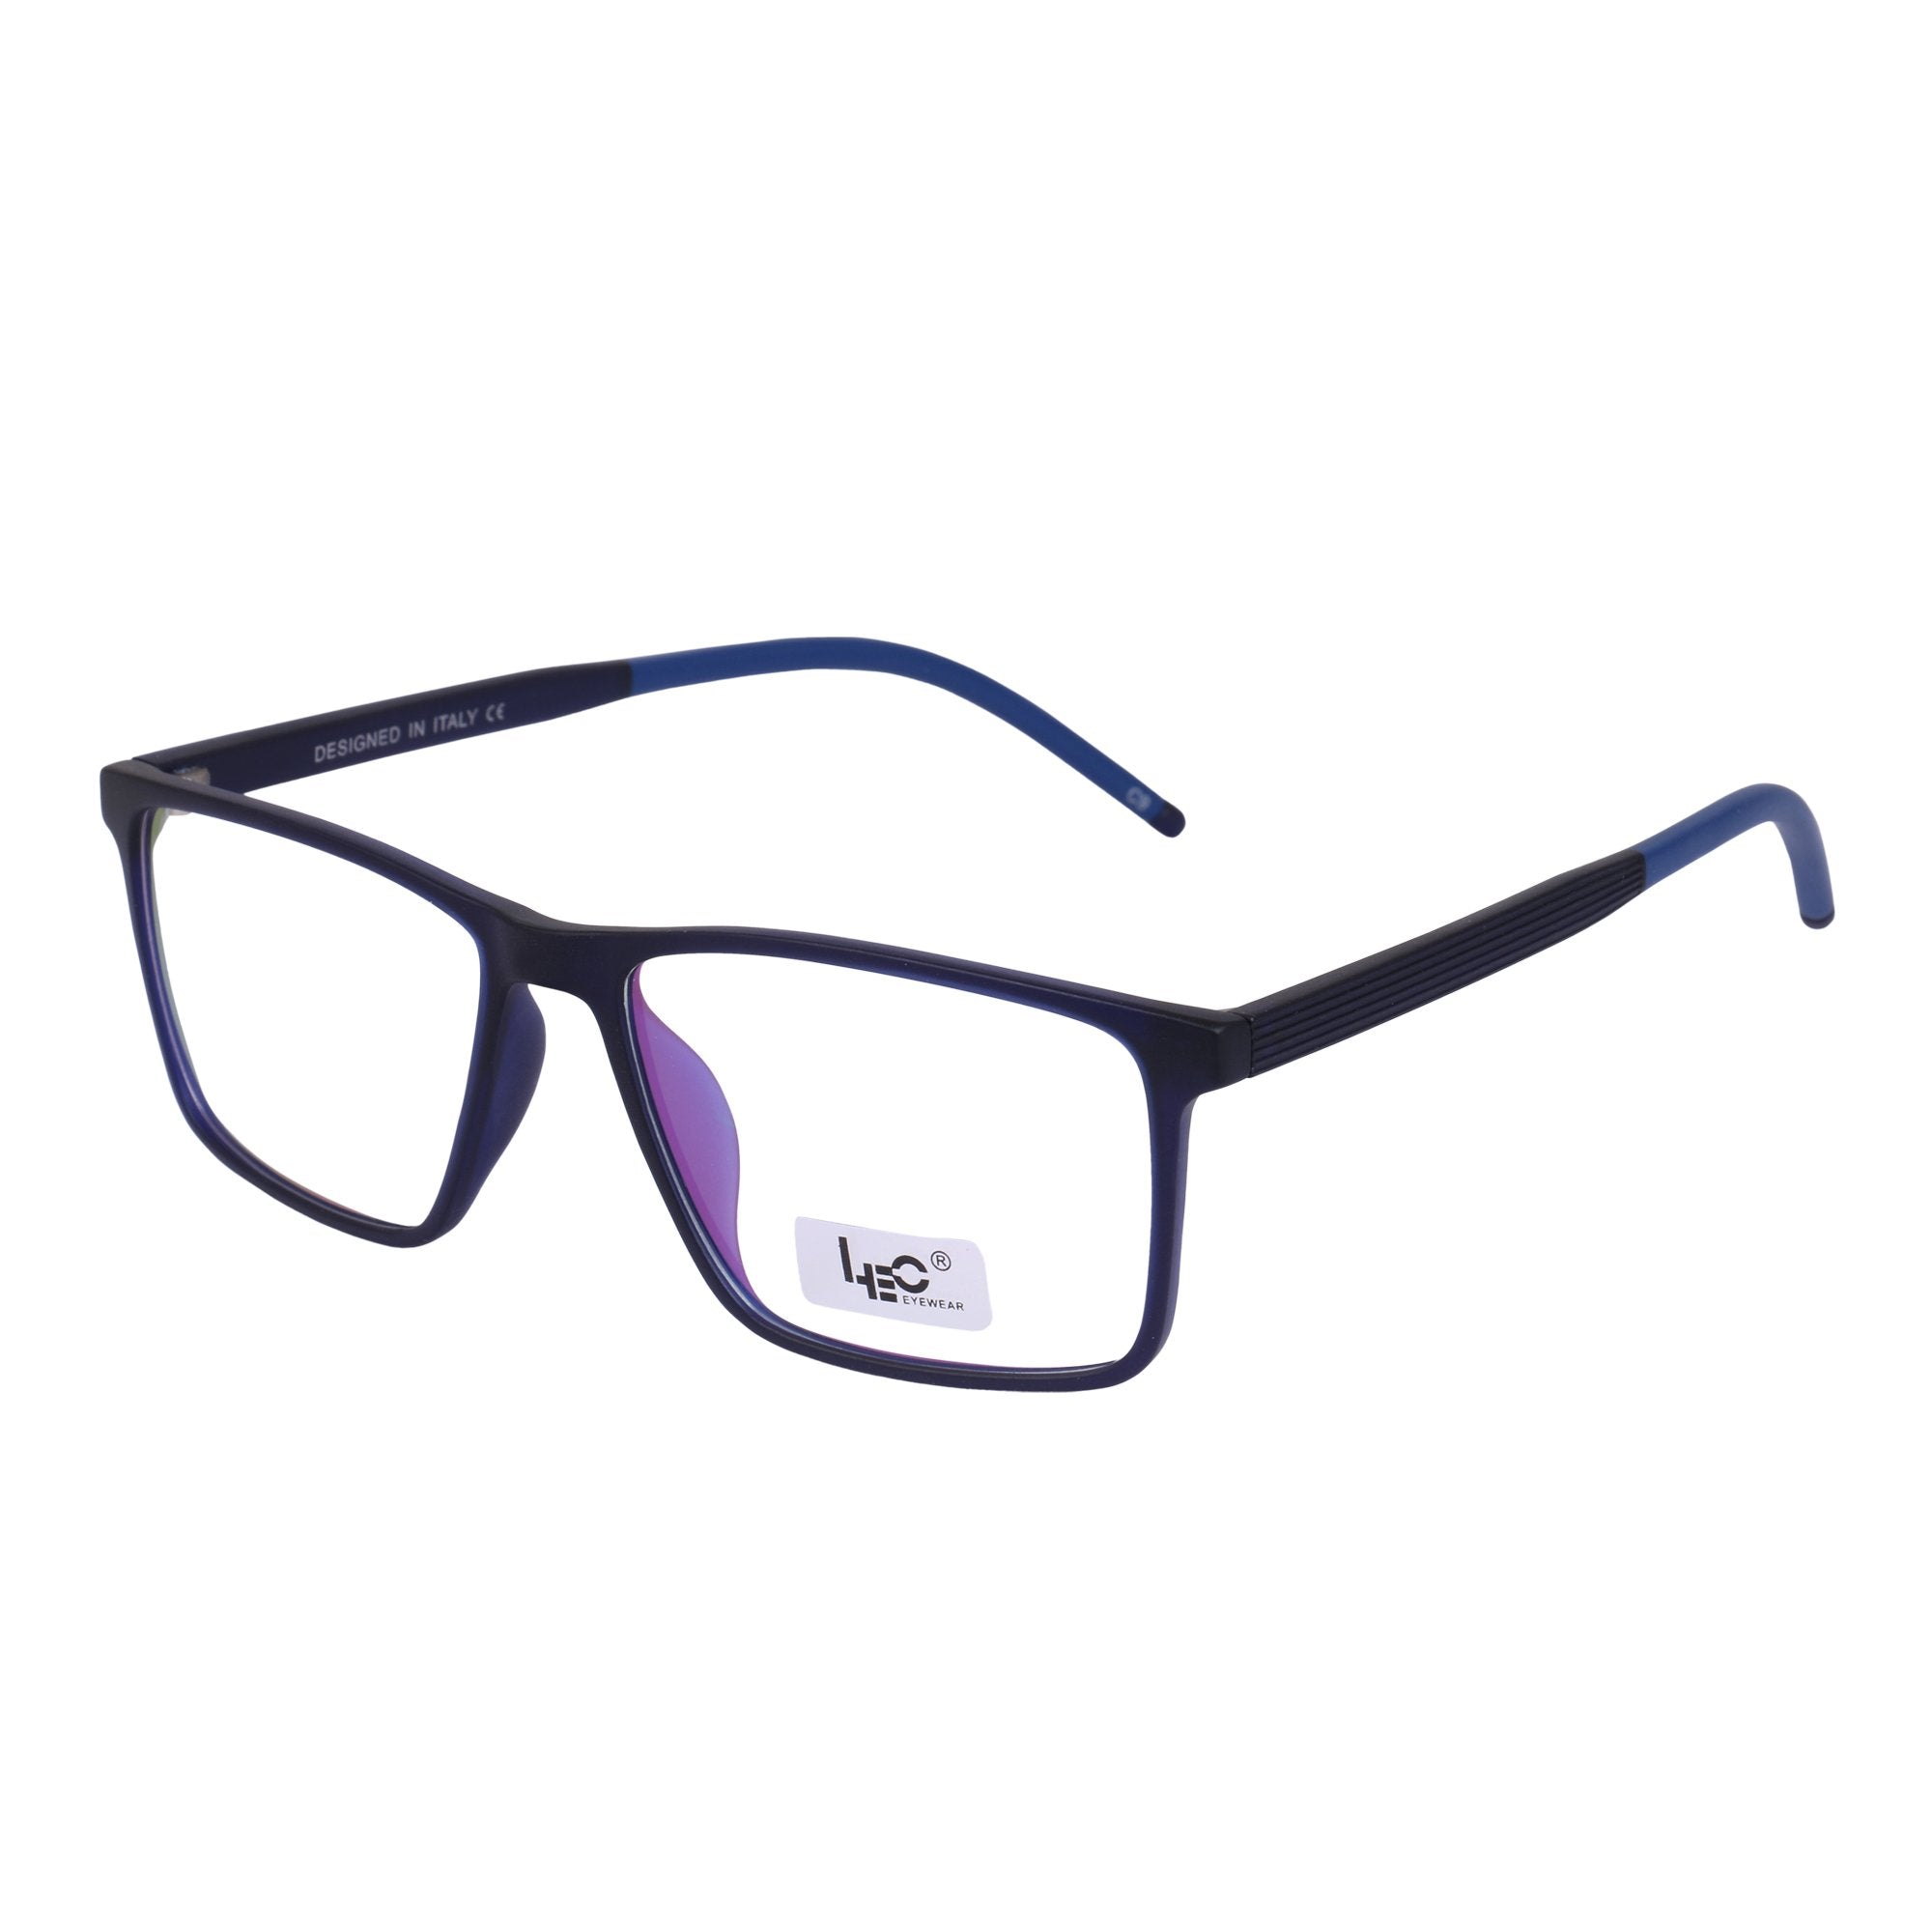 Dark Blue Square Rimmed Eyeglasses - L118. C9